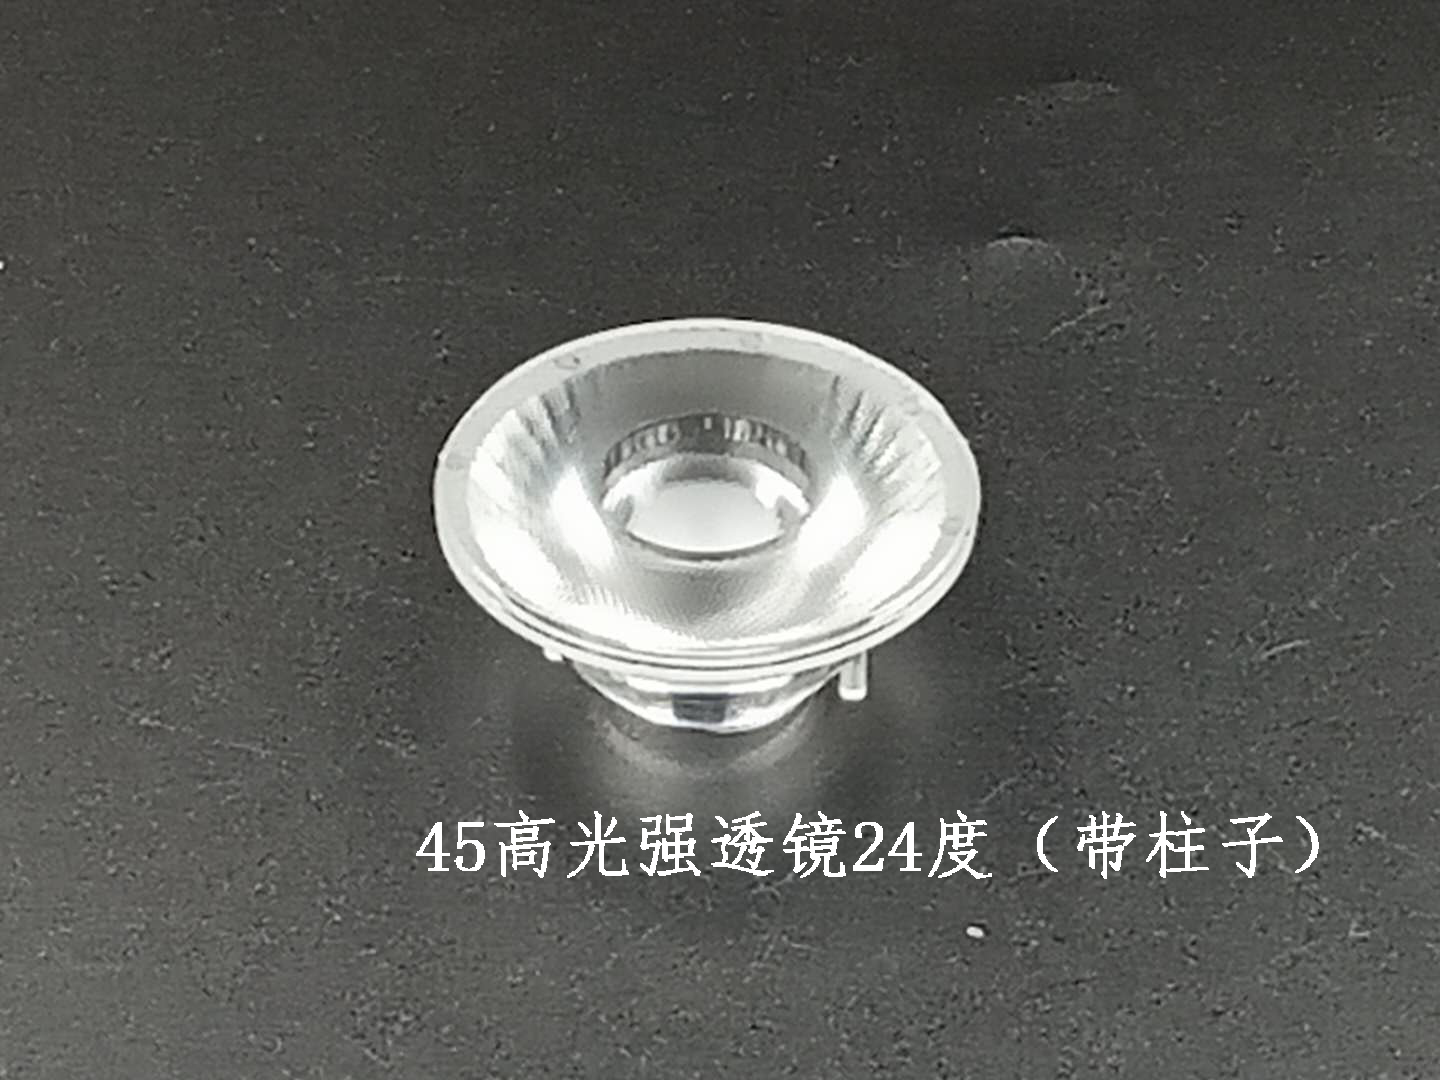 LED大功率亚克力透镜/φ45高光强透镜24度(带柱子)